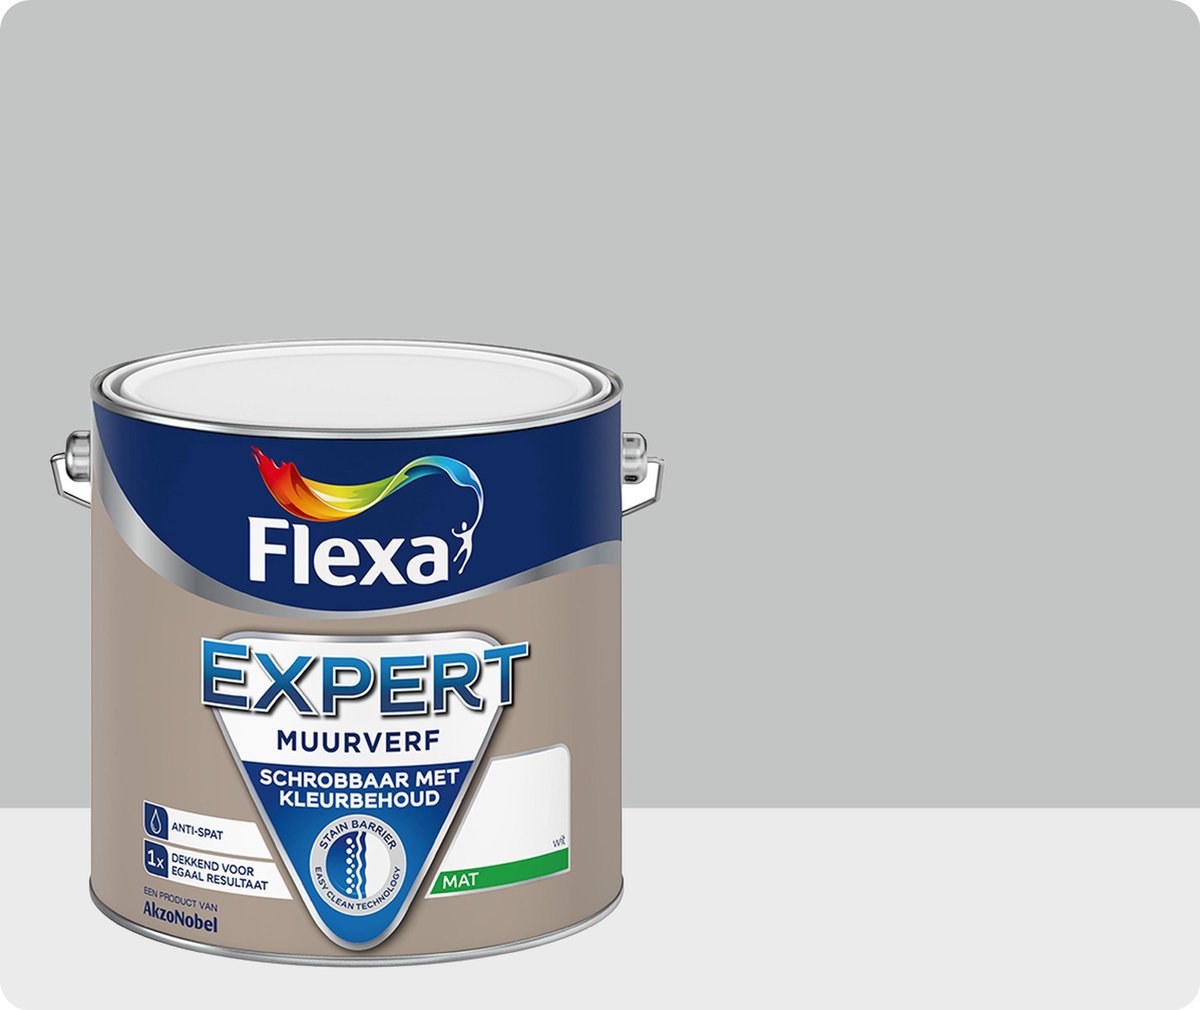 Flexa Expert Muurverf 2.5 L | bol.com